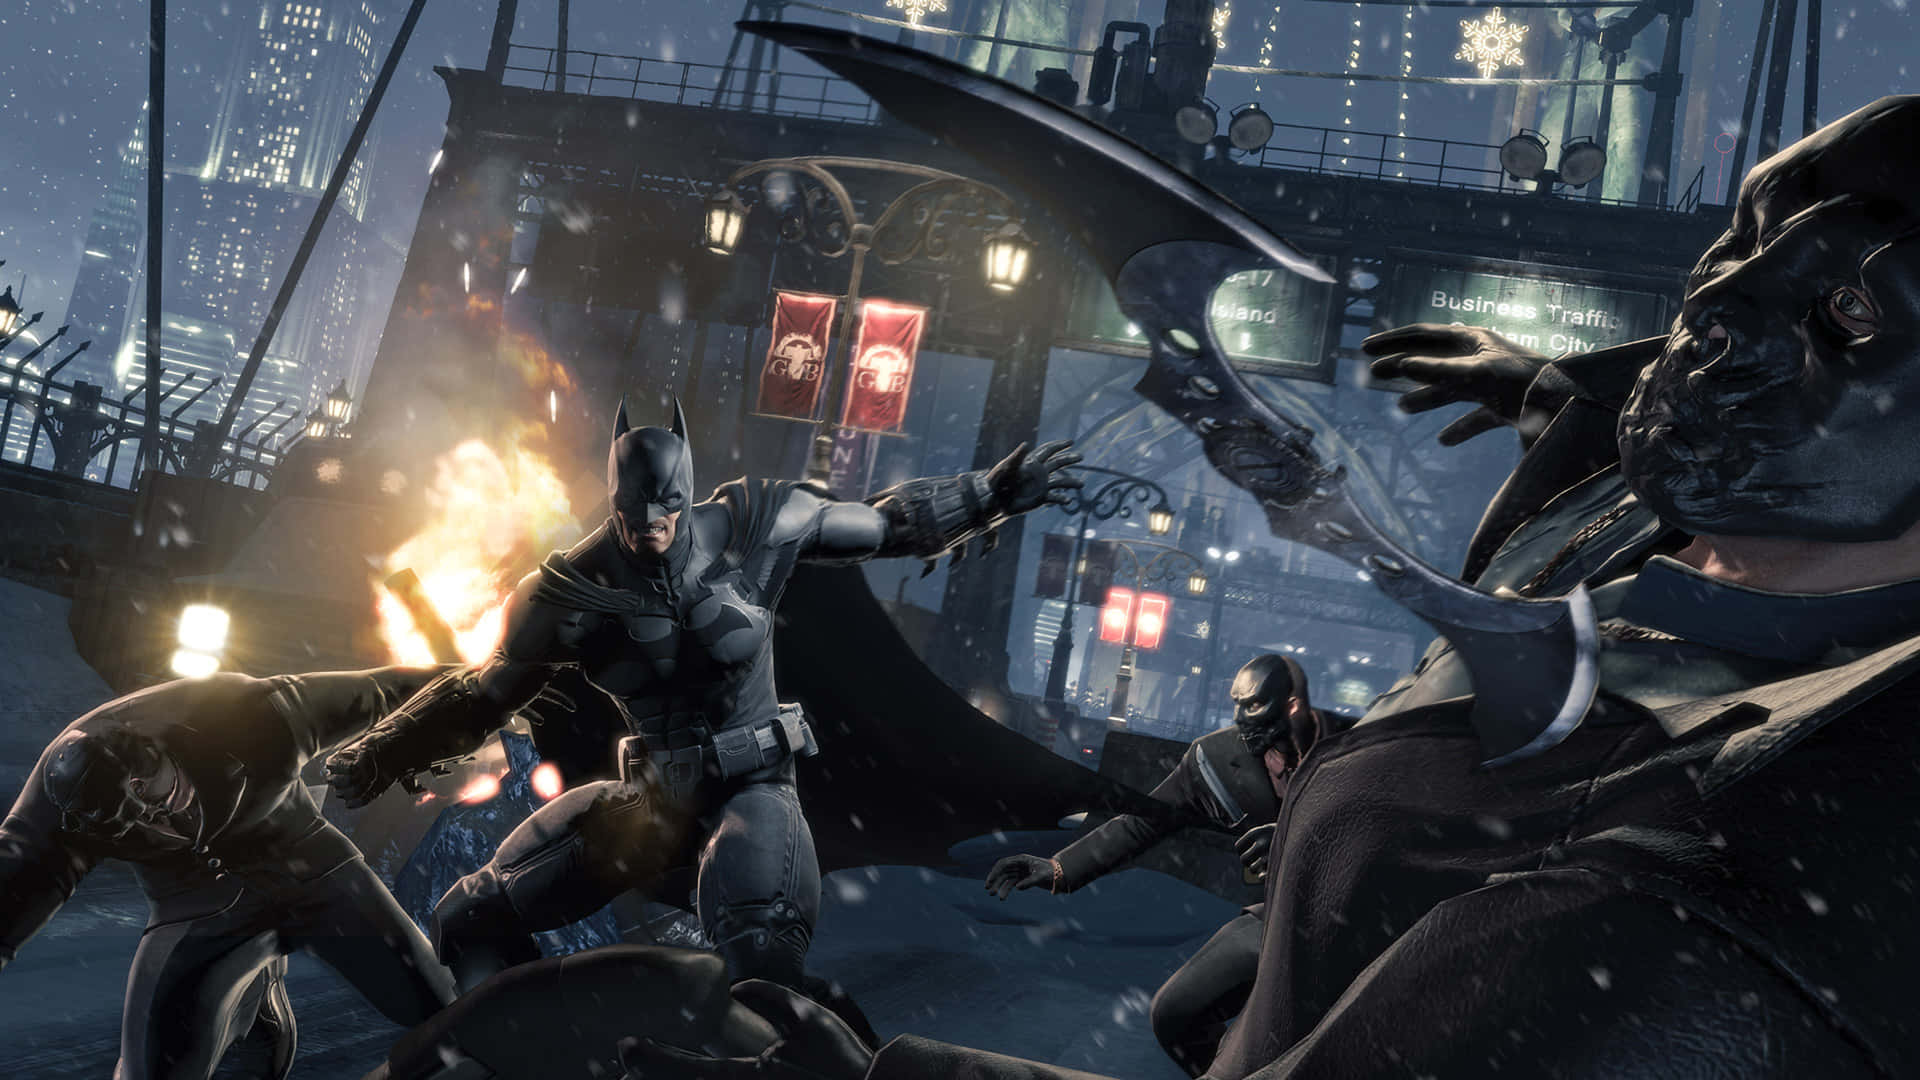 Batmanarkham Origins Gotham City Night Fight - Battaglia Notturna Nella Città Di Gotham Della Serie Arkham Origins Di Batman. Sfondo